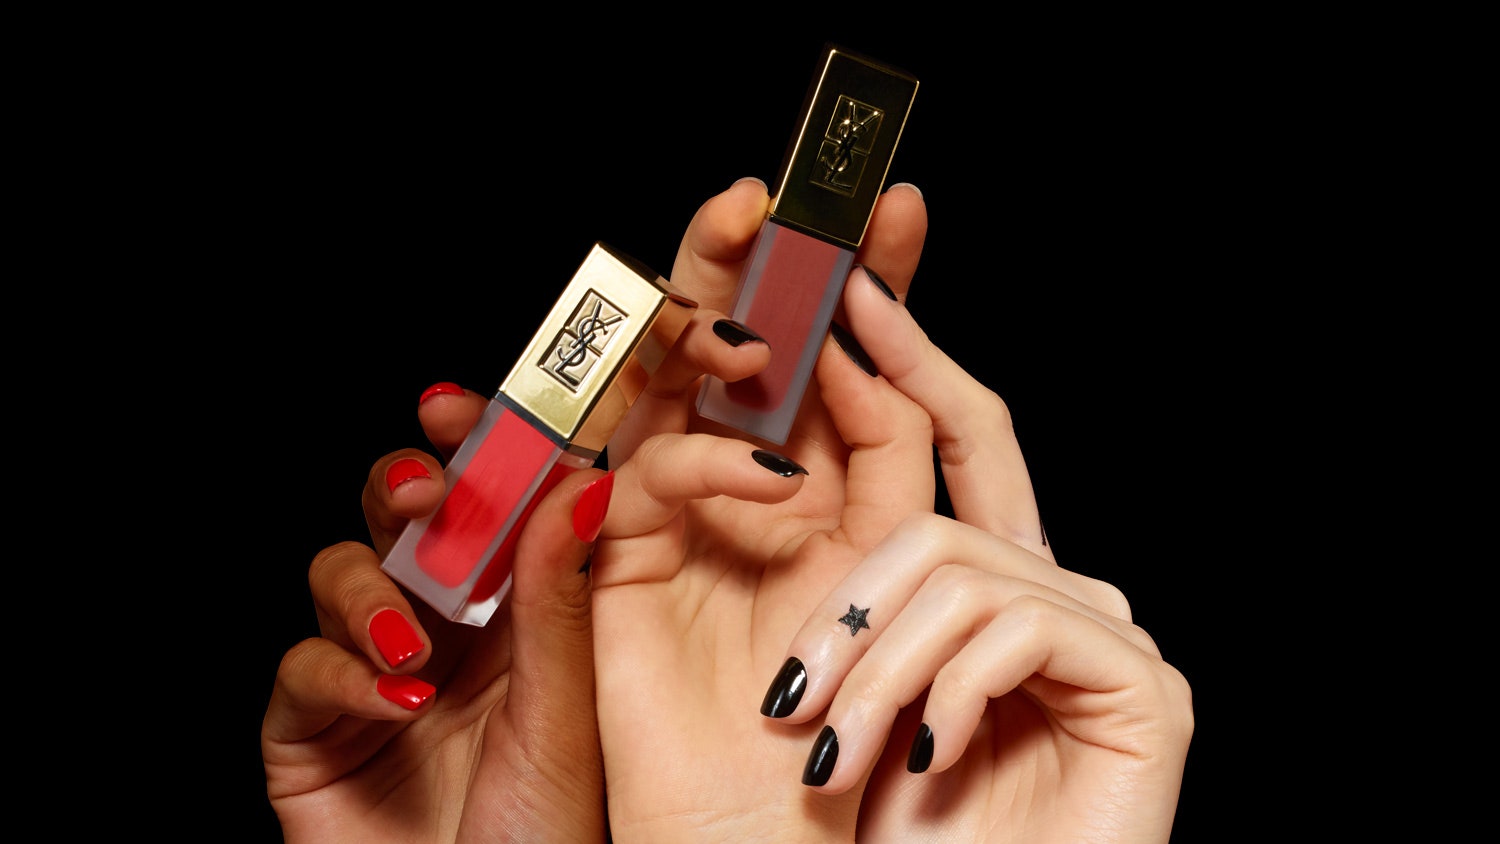 Коллекции макияжа от Yves Saint Laurent Beaut жидкие помады Tatouage Couture и карандаш для губ